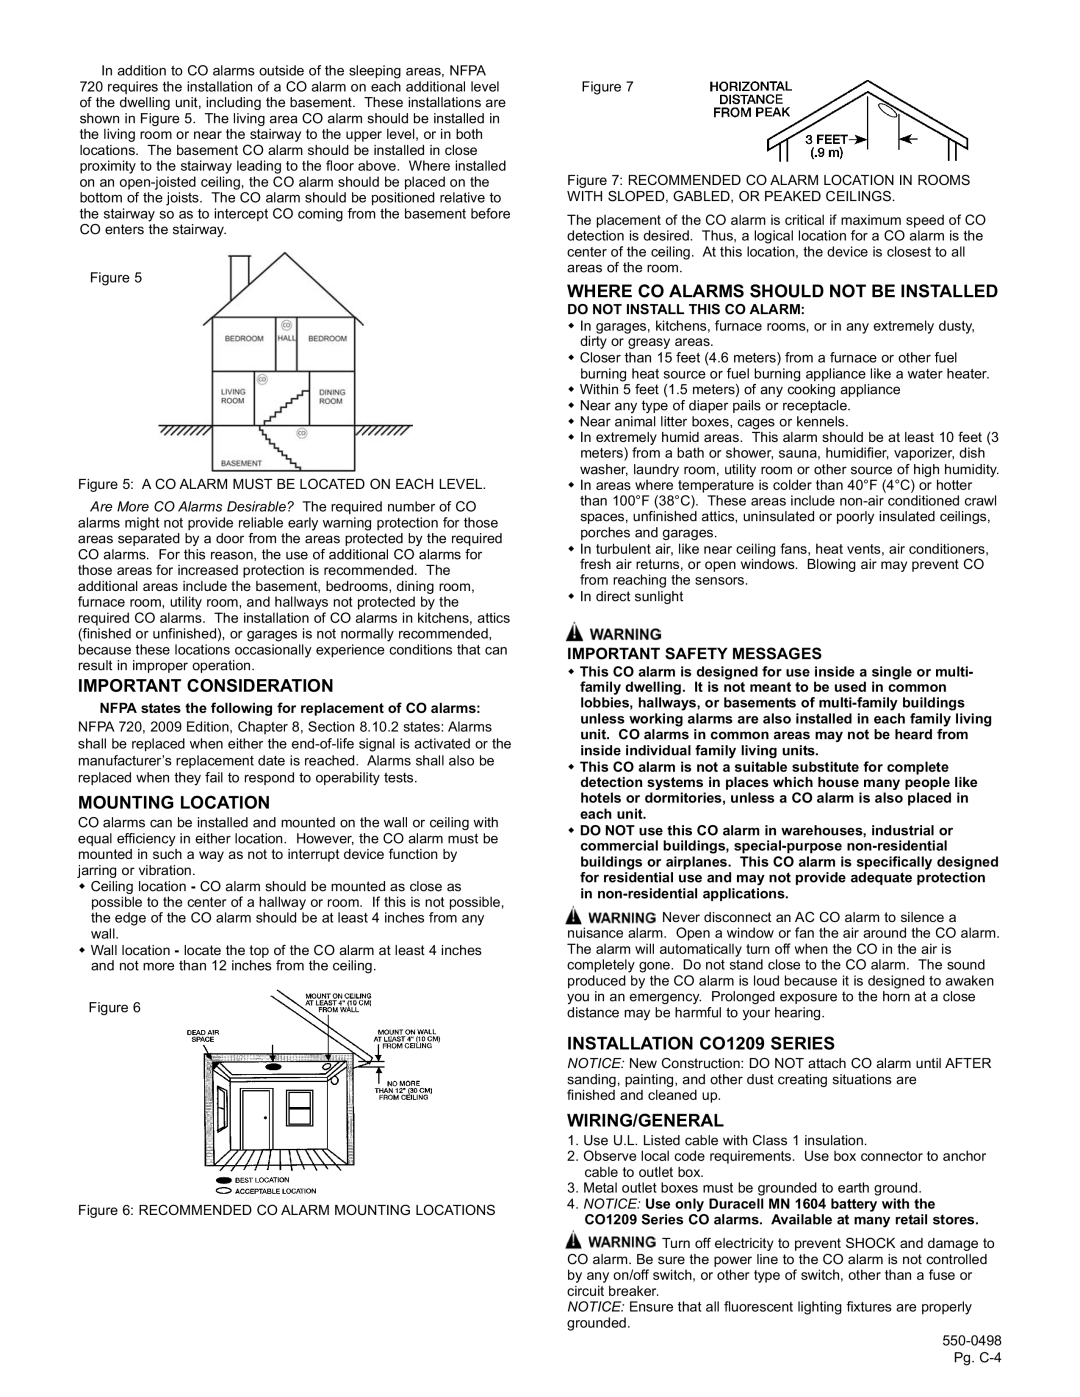 Gentek installation instructions Important Consideration, Mounting Location, INSTALLATION CO1209 SERIES, Wiring/General 